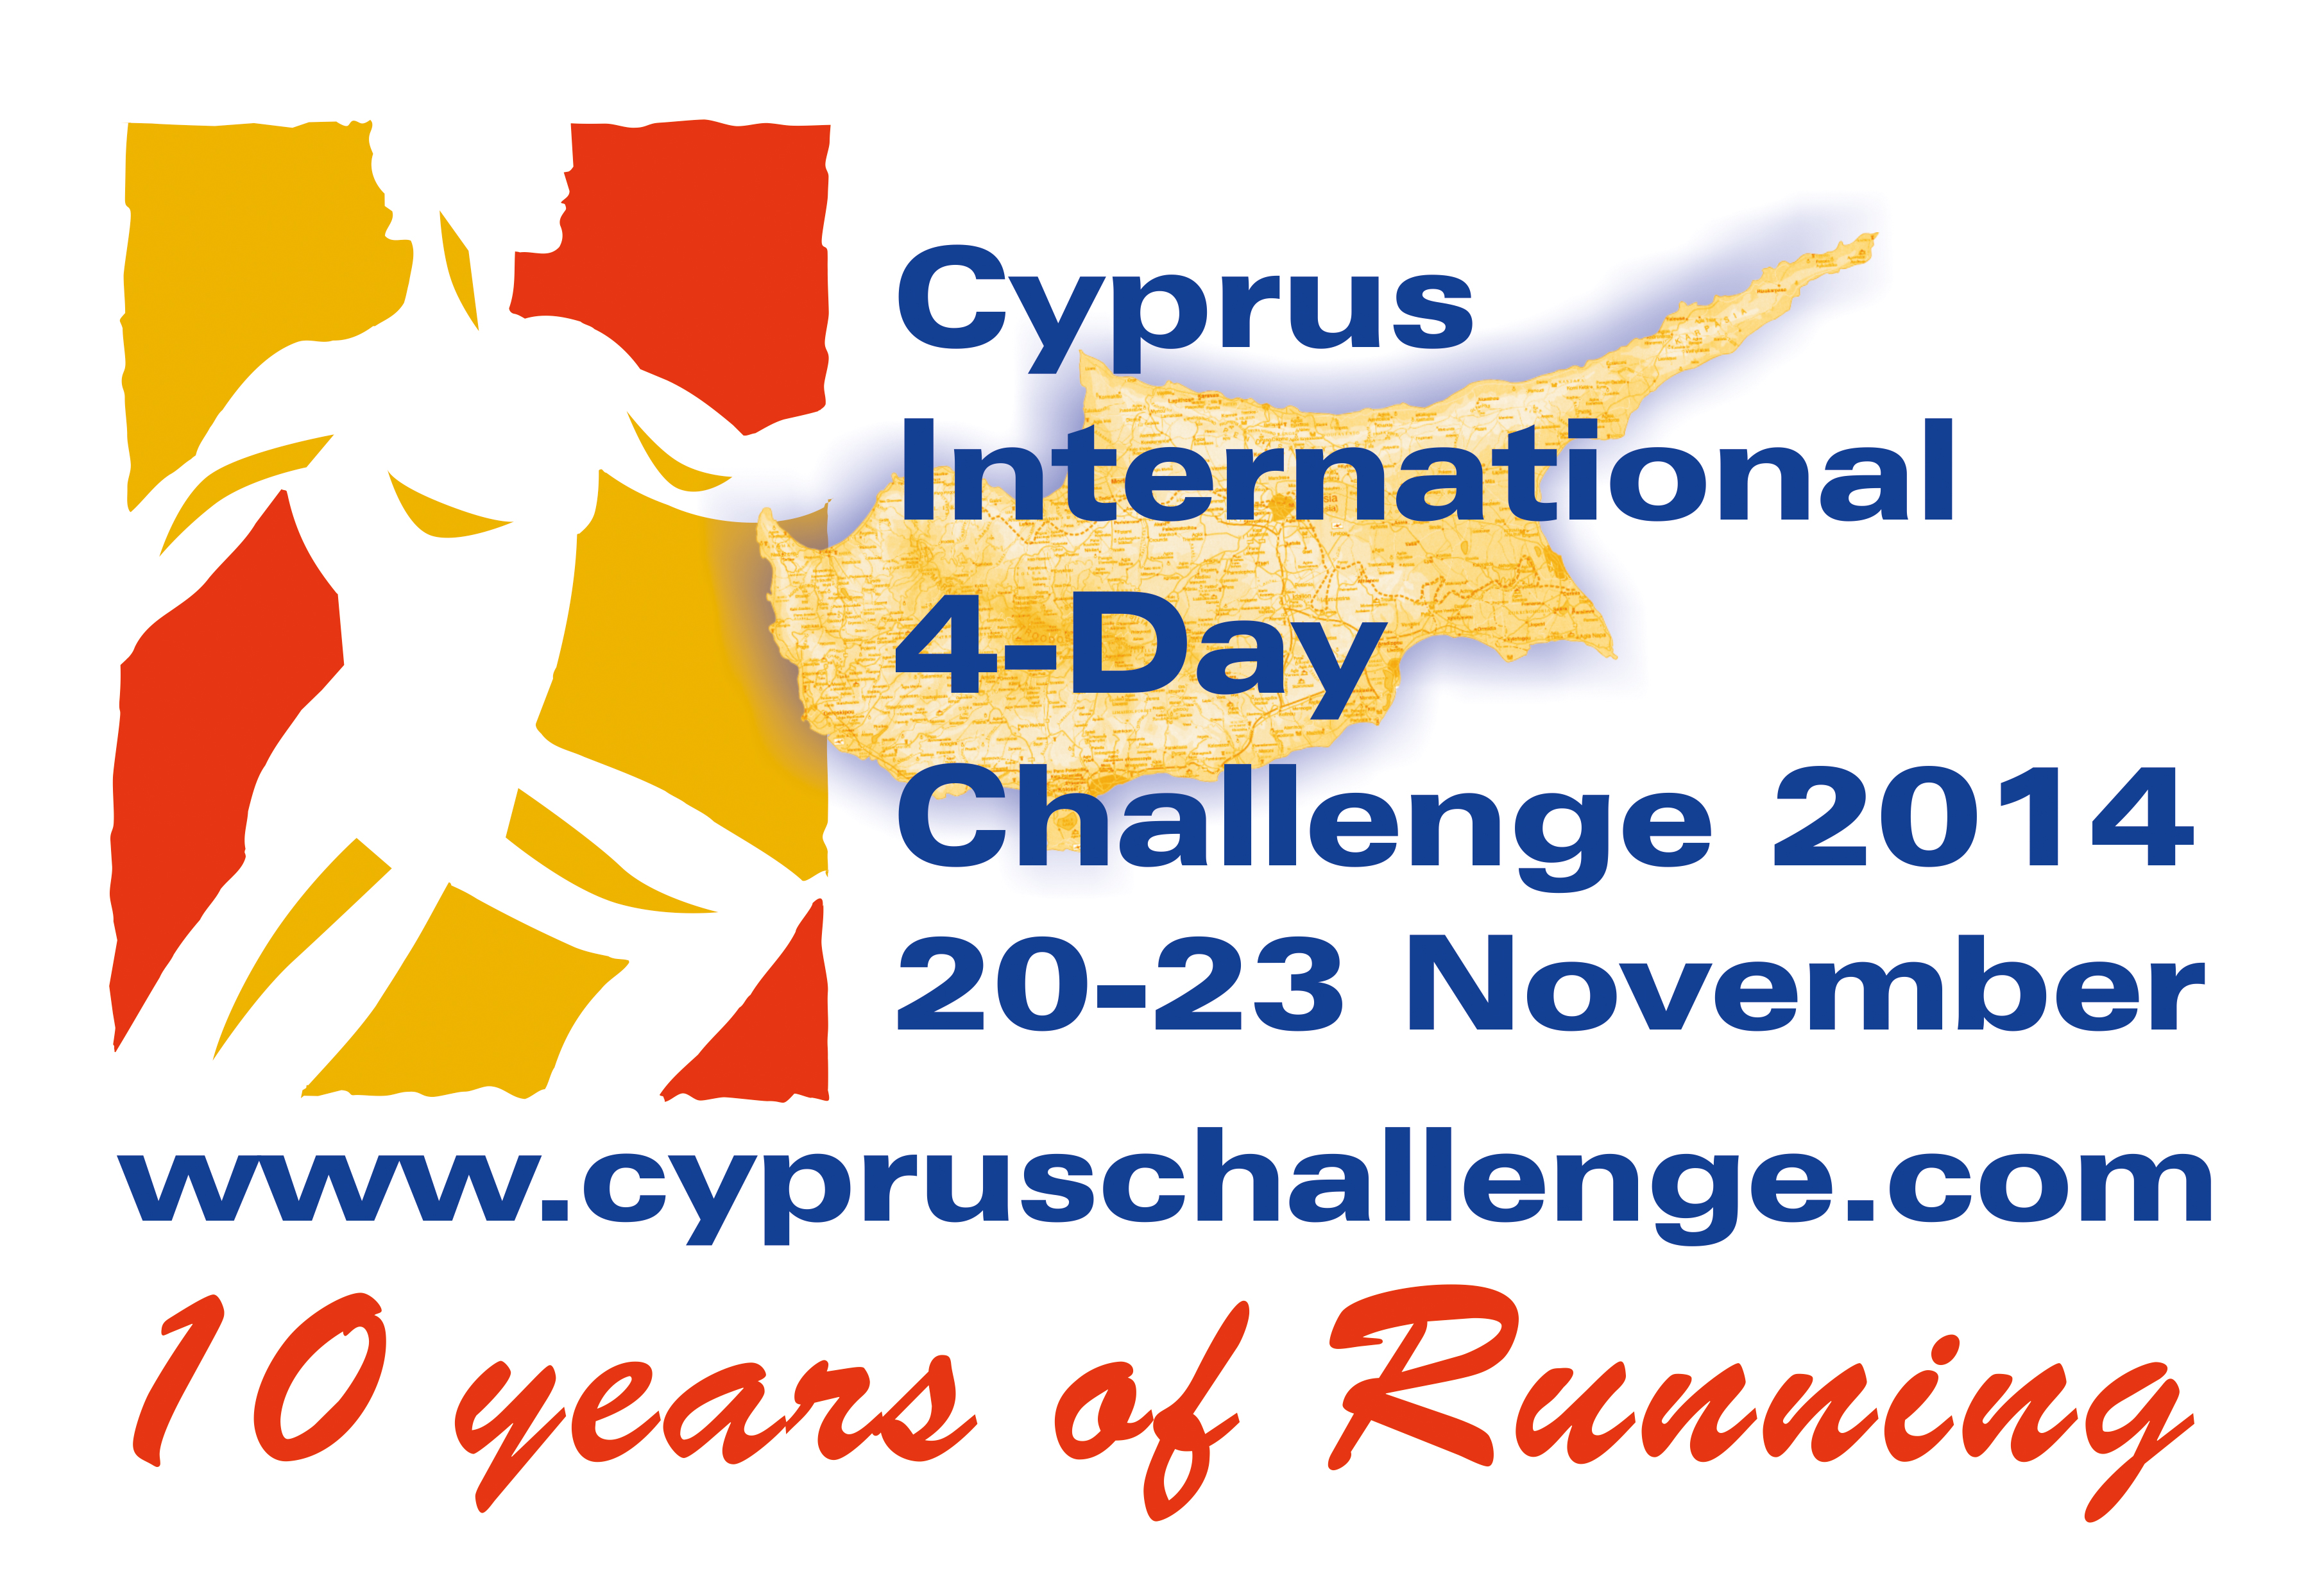 Cyprus International 4 Day Challenge